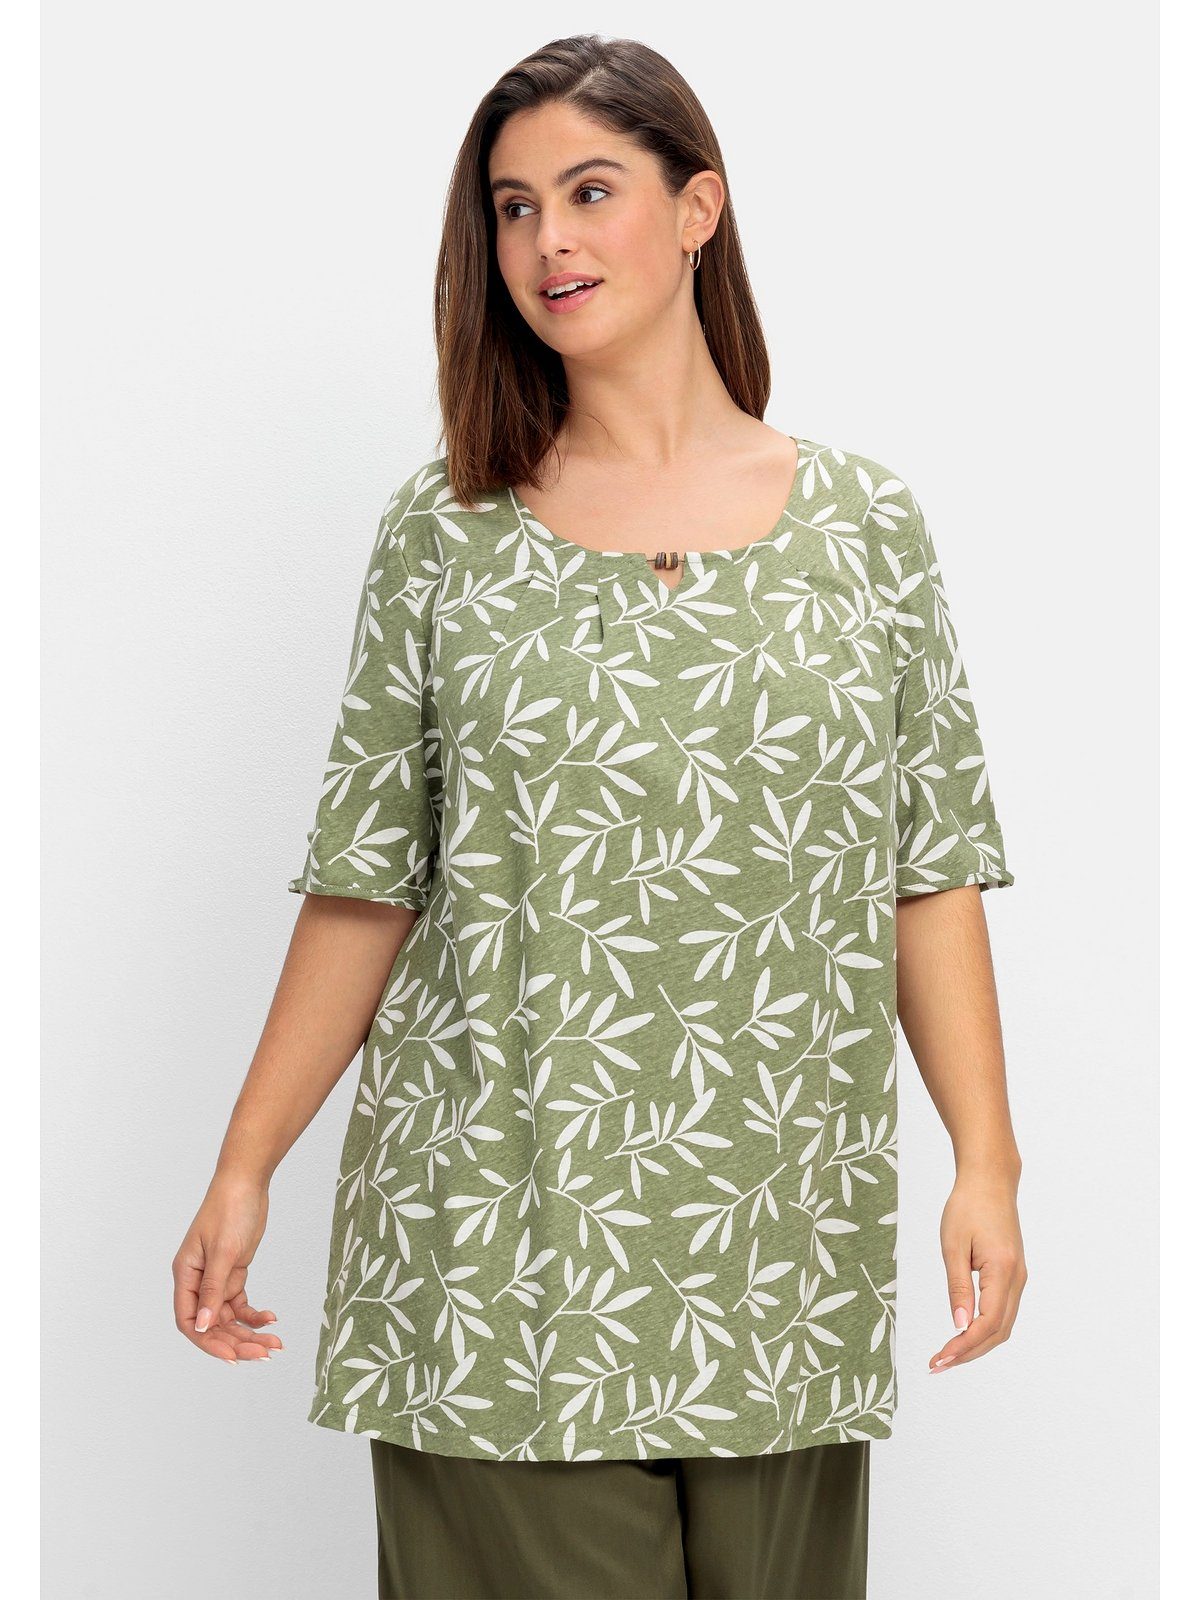 Sheego T-Shirt Große Leinen-Mix Blätterprint, Größen khaki mit im gemustert